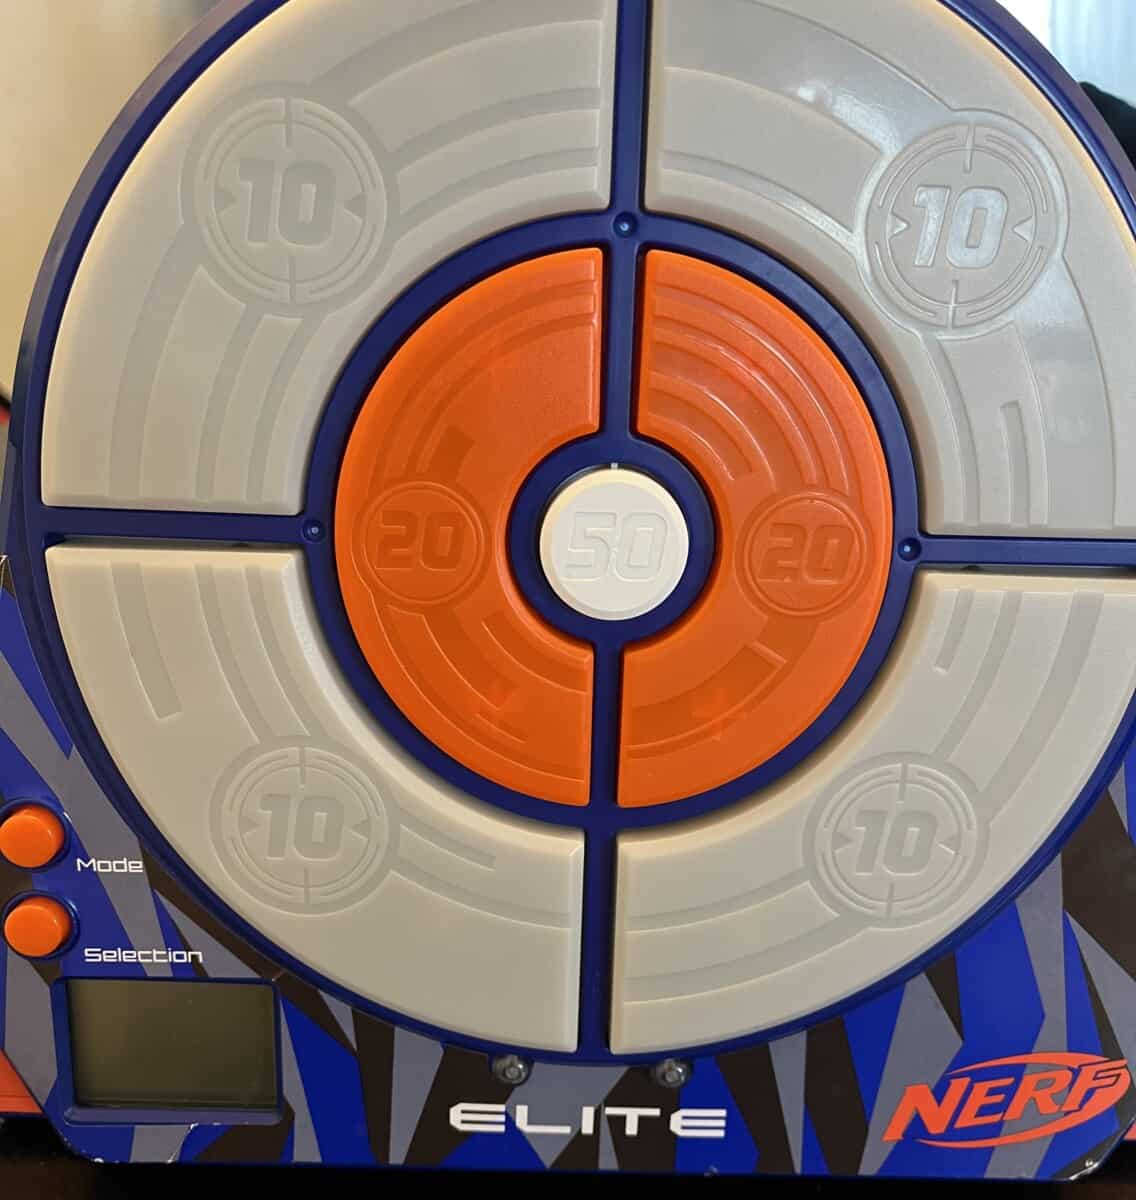 nerf-elite-digital-target-blue-orange-review-toy-reviews-by-dad